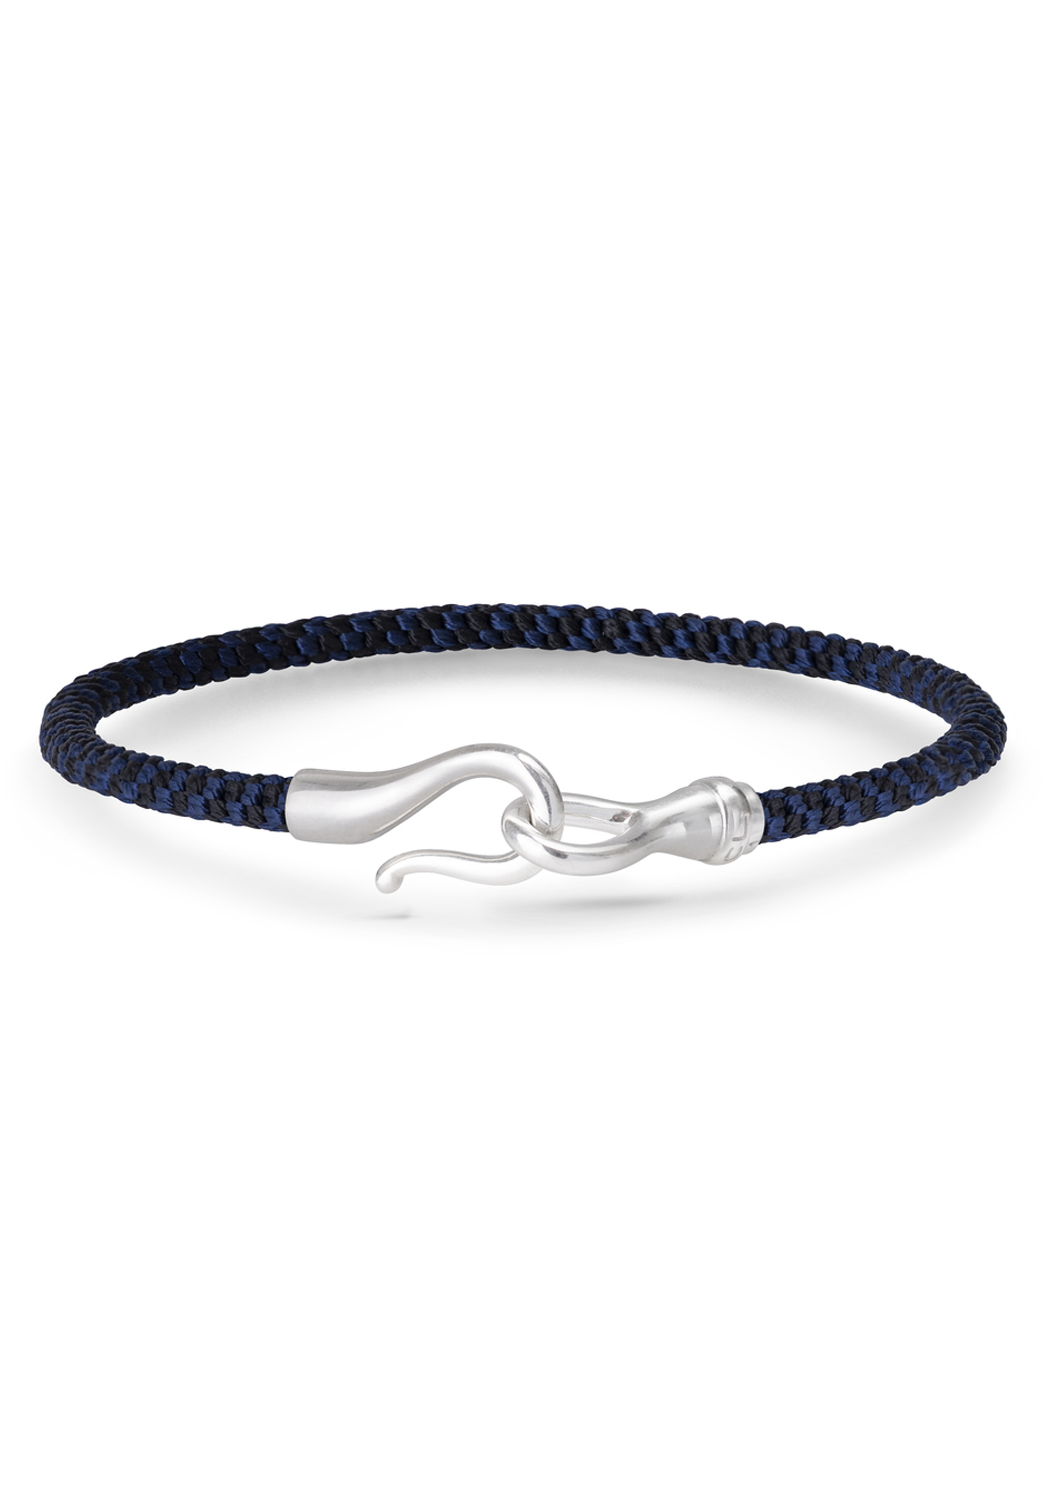 Ole Lynggaard Life Sterling Silver Midnight Blue Rope Bracelet | Ref. A3046-301 | OsterJewelers.com